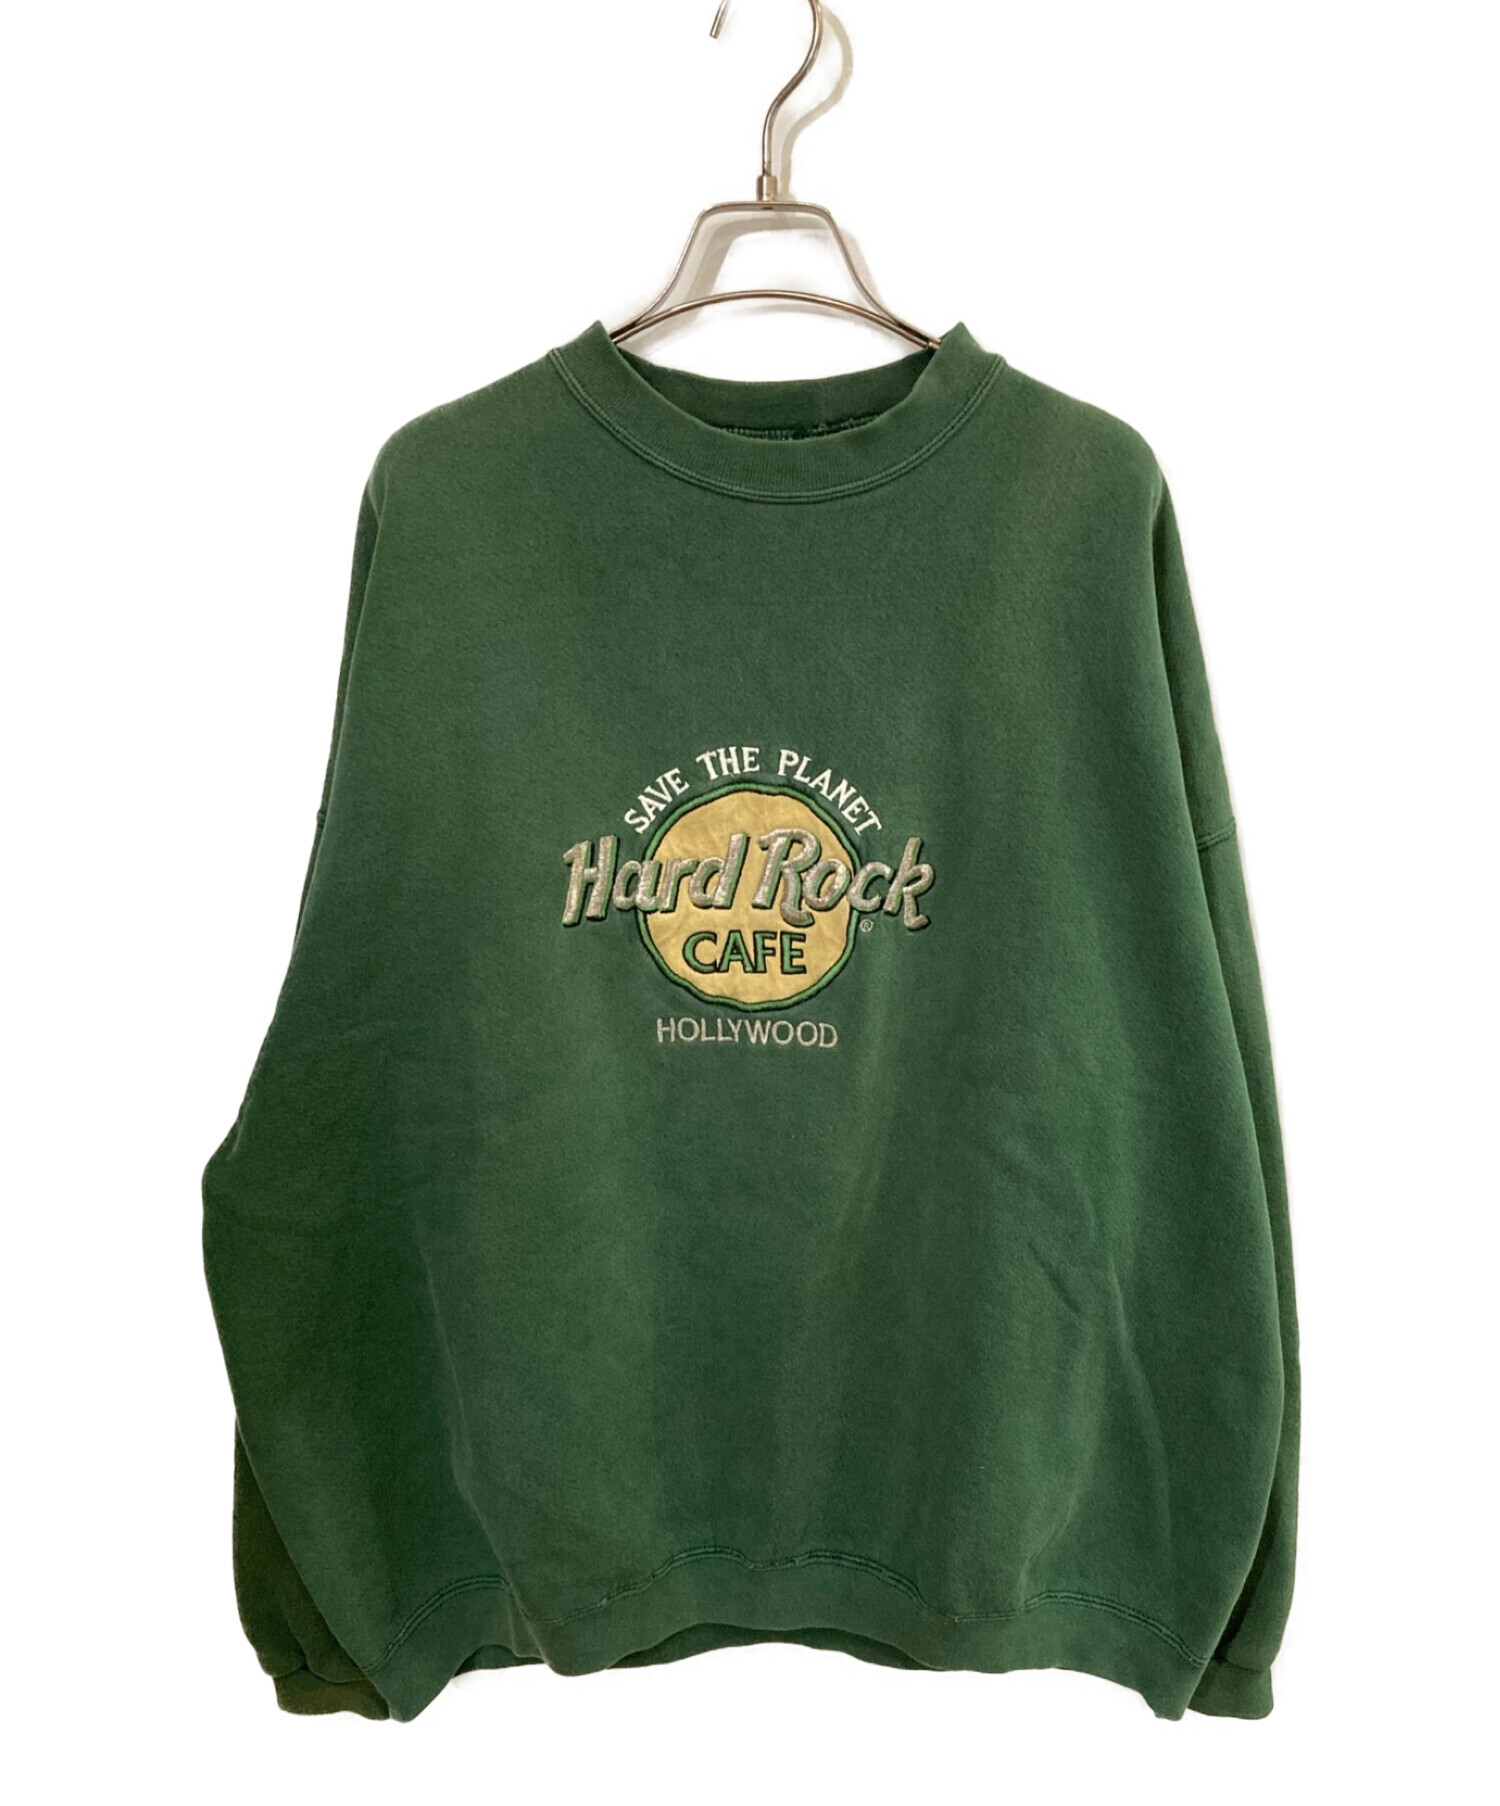 Hard Rock cafe (ハードロックカフェ) 刺繍スウェット グリーン サイズ:XL